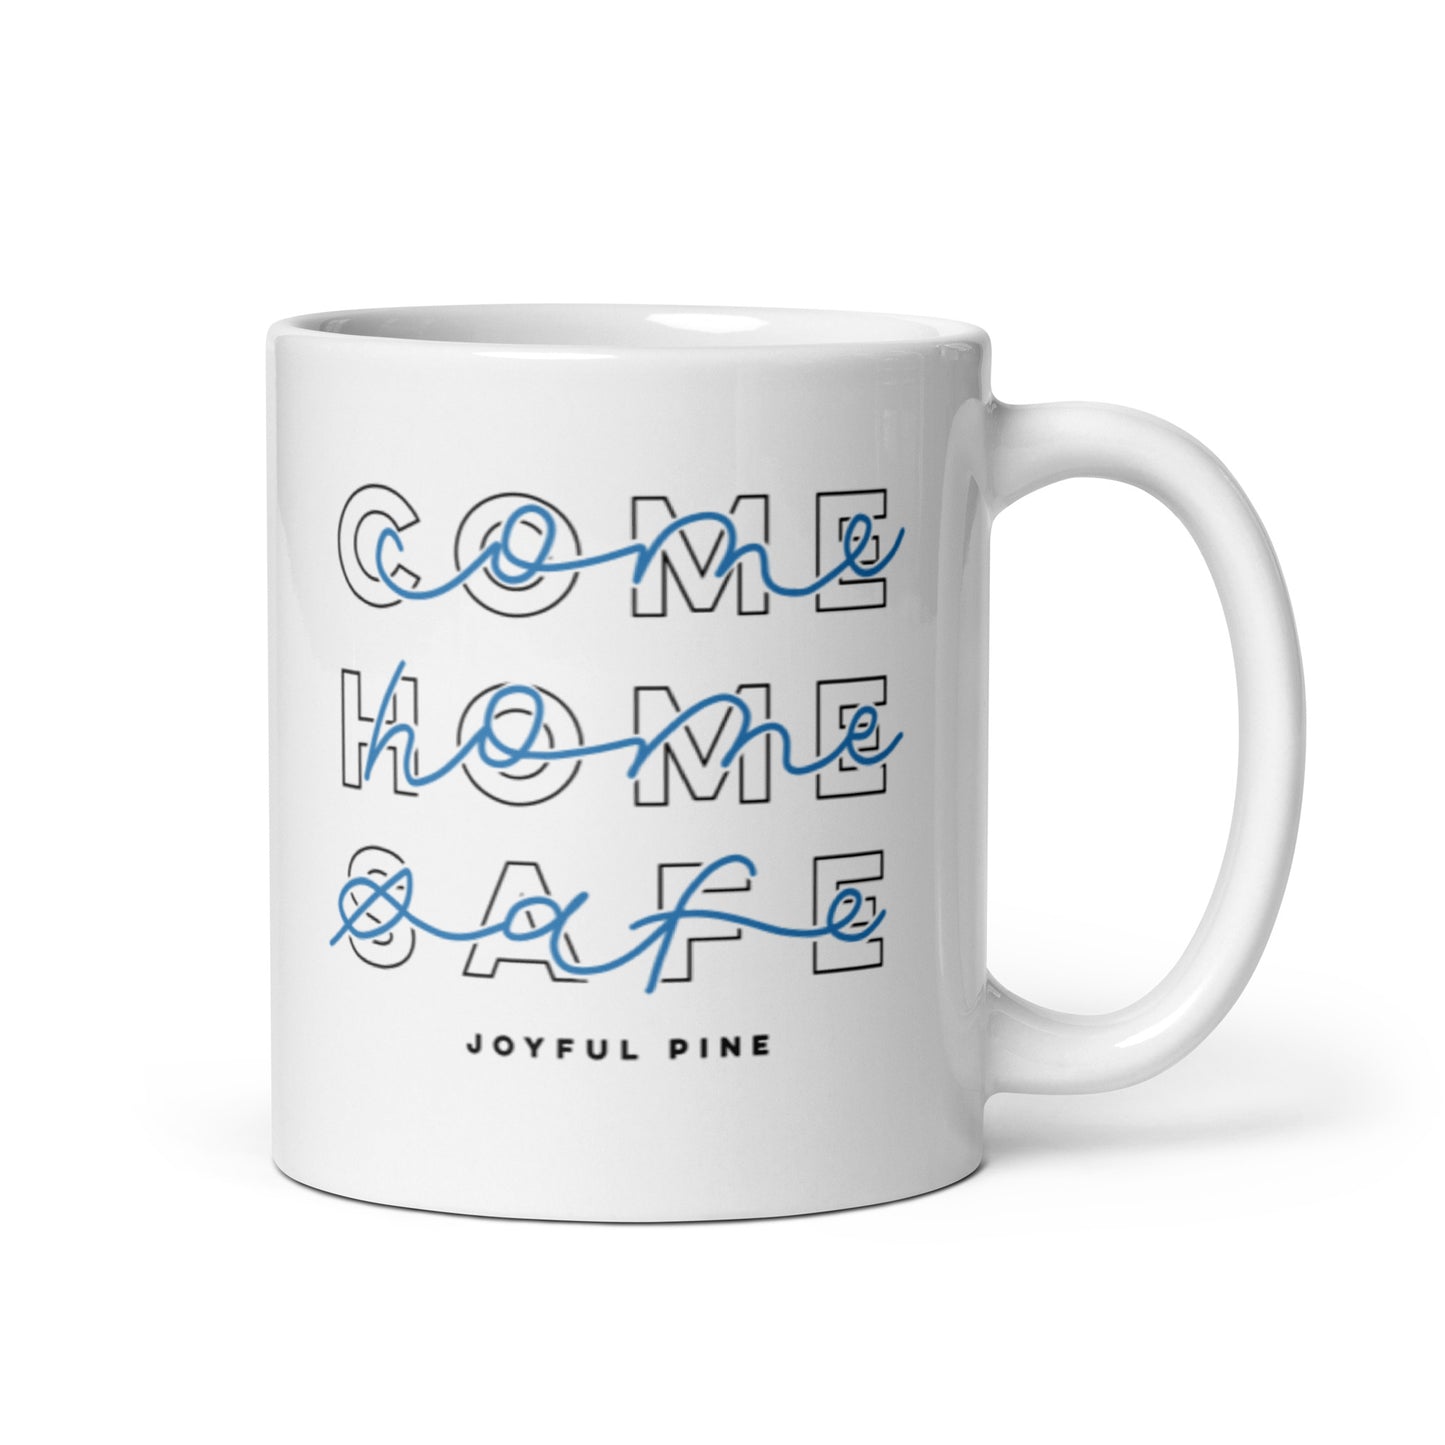 Come Home Safe Mug - Law Enforcement